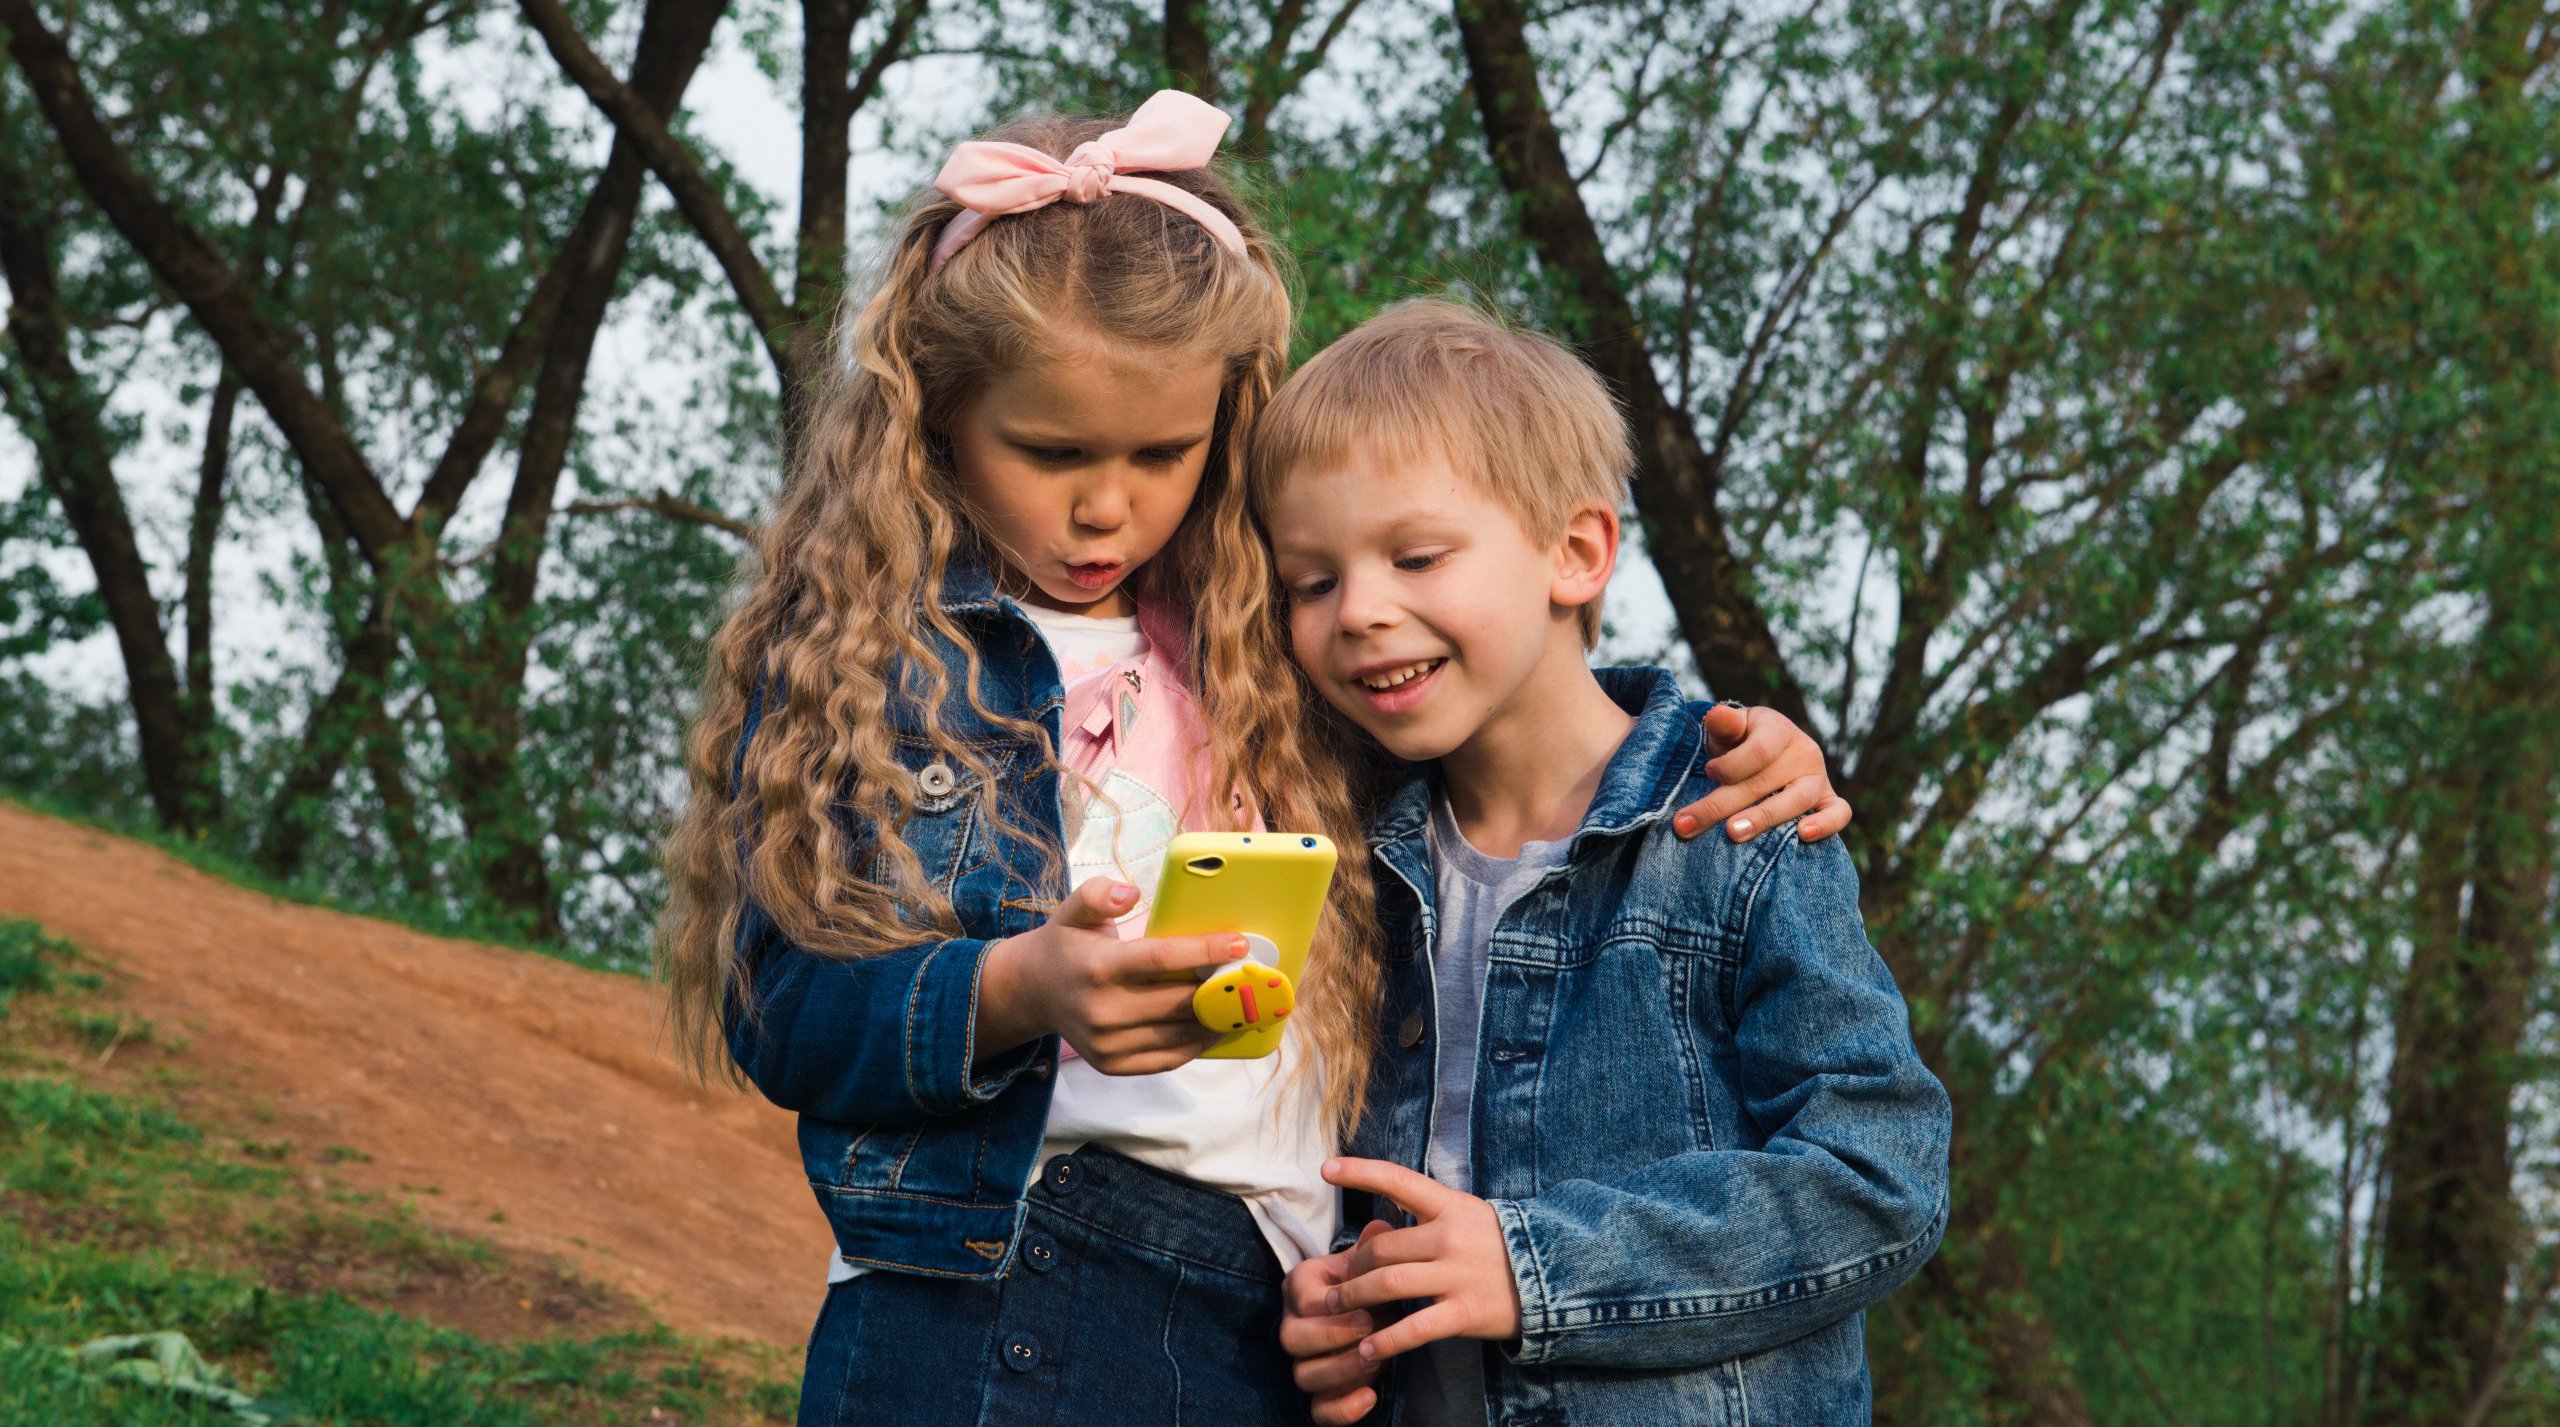 kids-play-smartphone-2021-09-04-13-27-45-utc